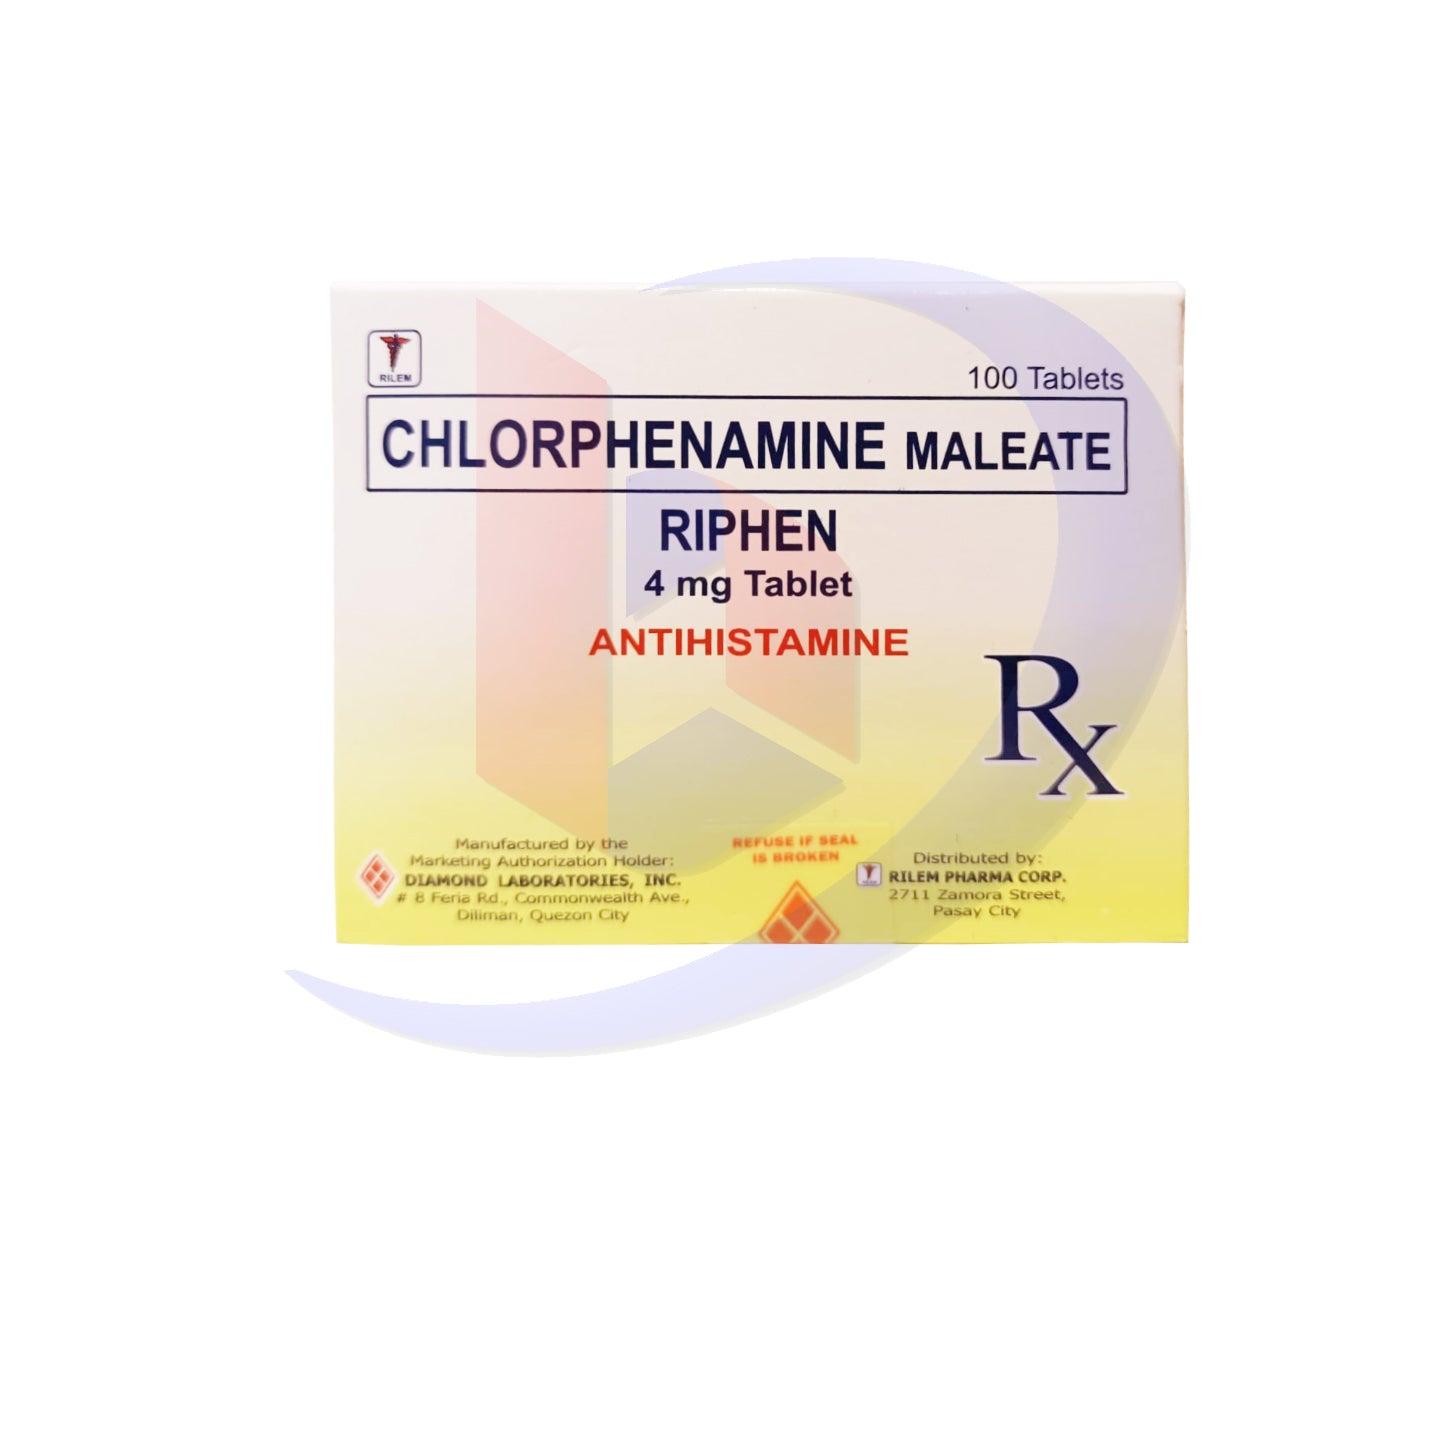 Chlorphenamine Maleate (Riphen) 4mg Tablet Antihistamine Tablet 100's